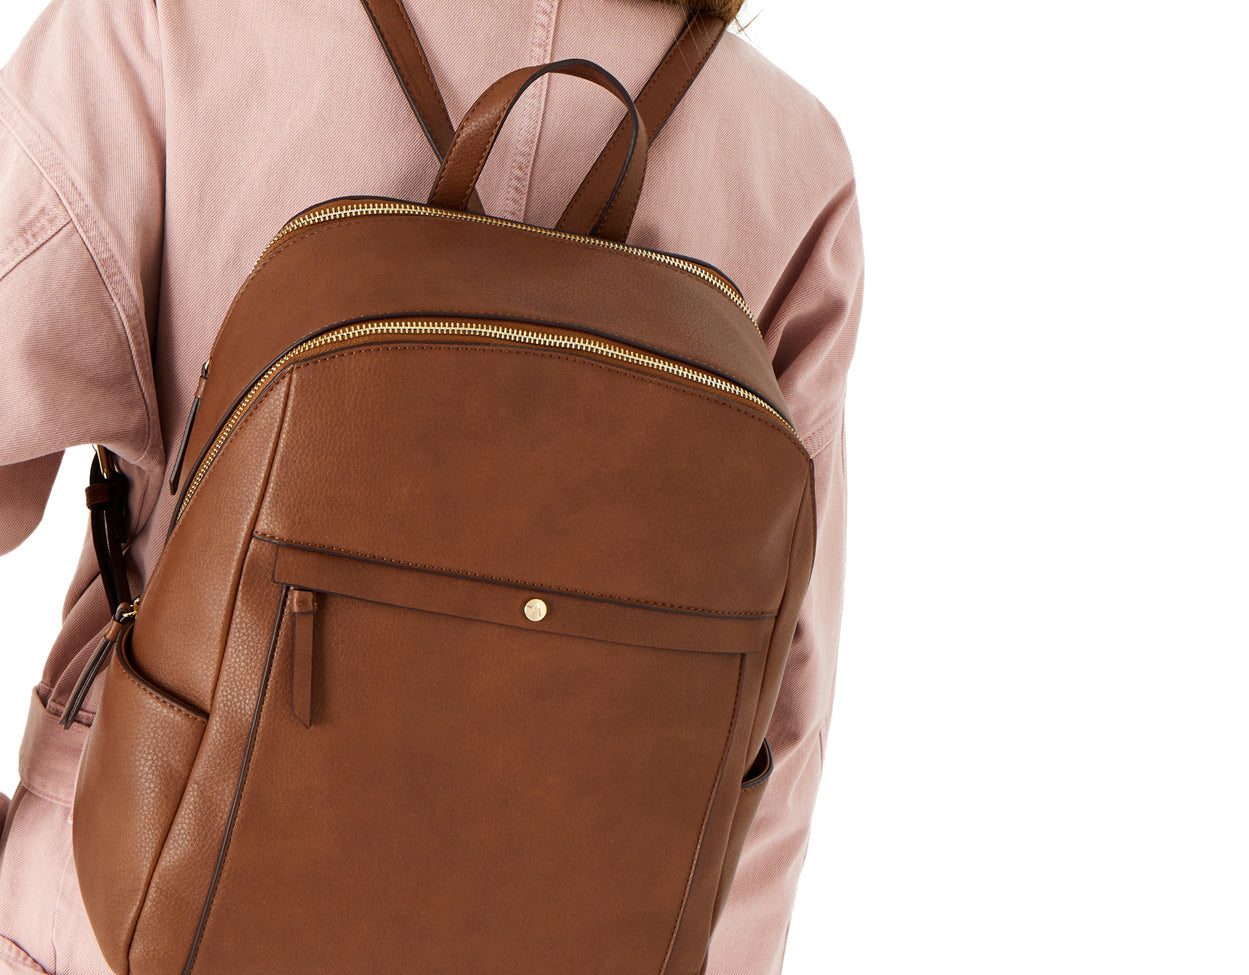 Accessorize London Women'S Faux Leather Tan Sammy Backpack